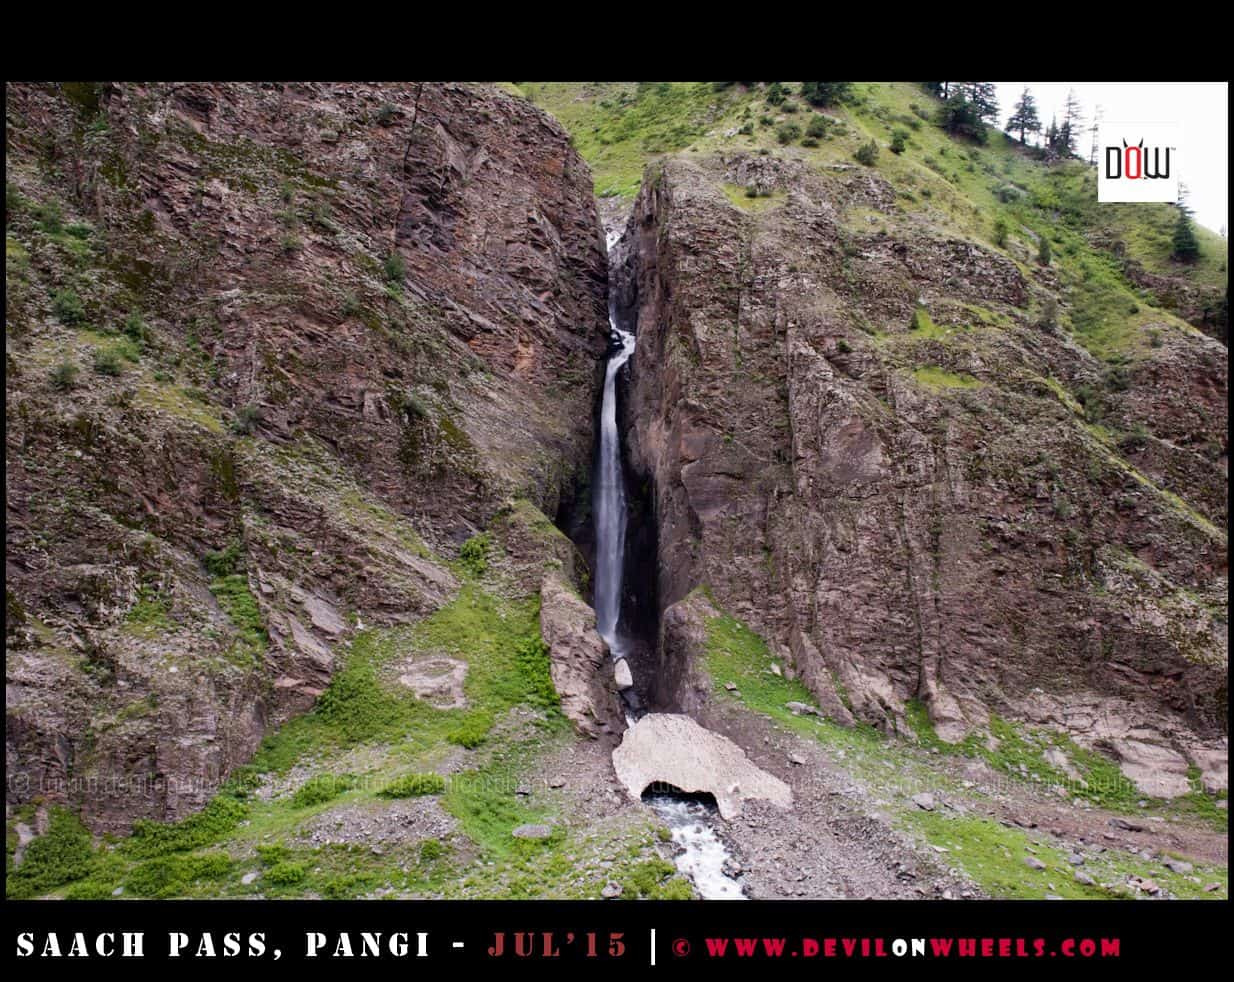 In the land of Waterfalls - Pangi Valley